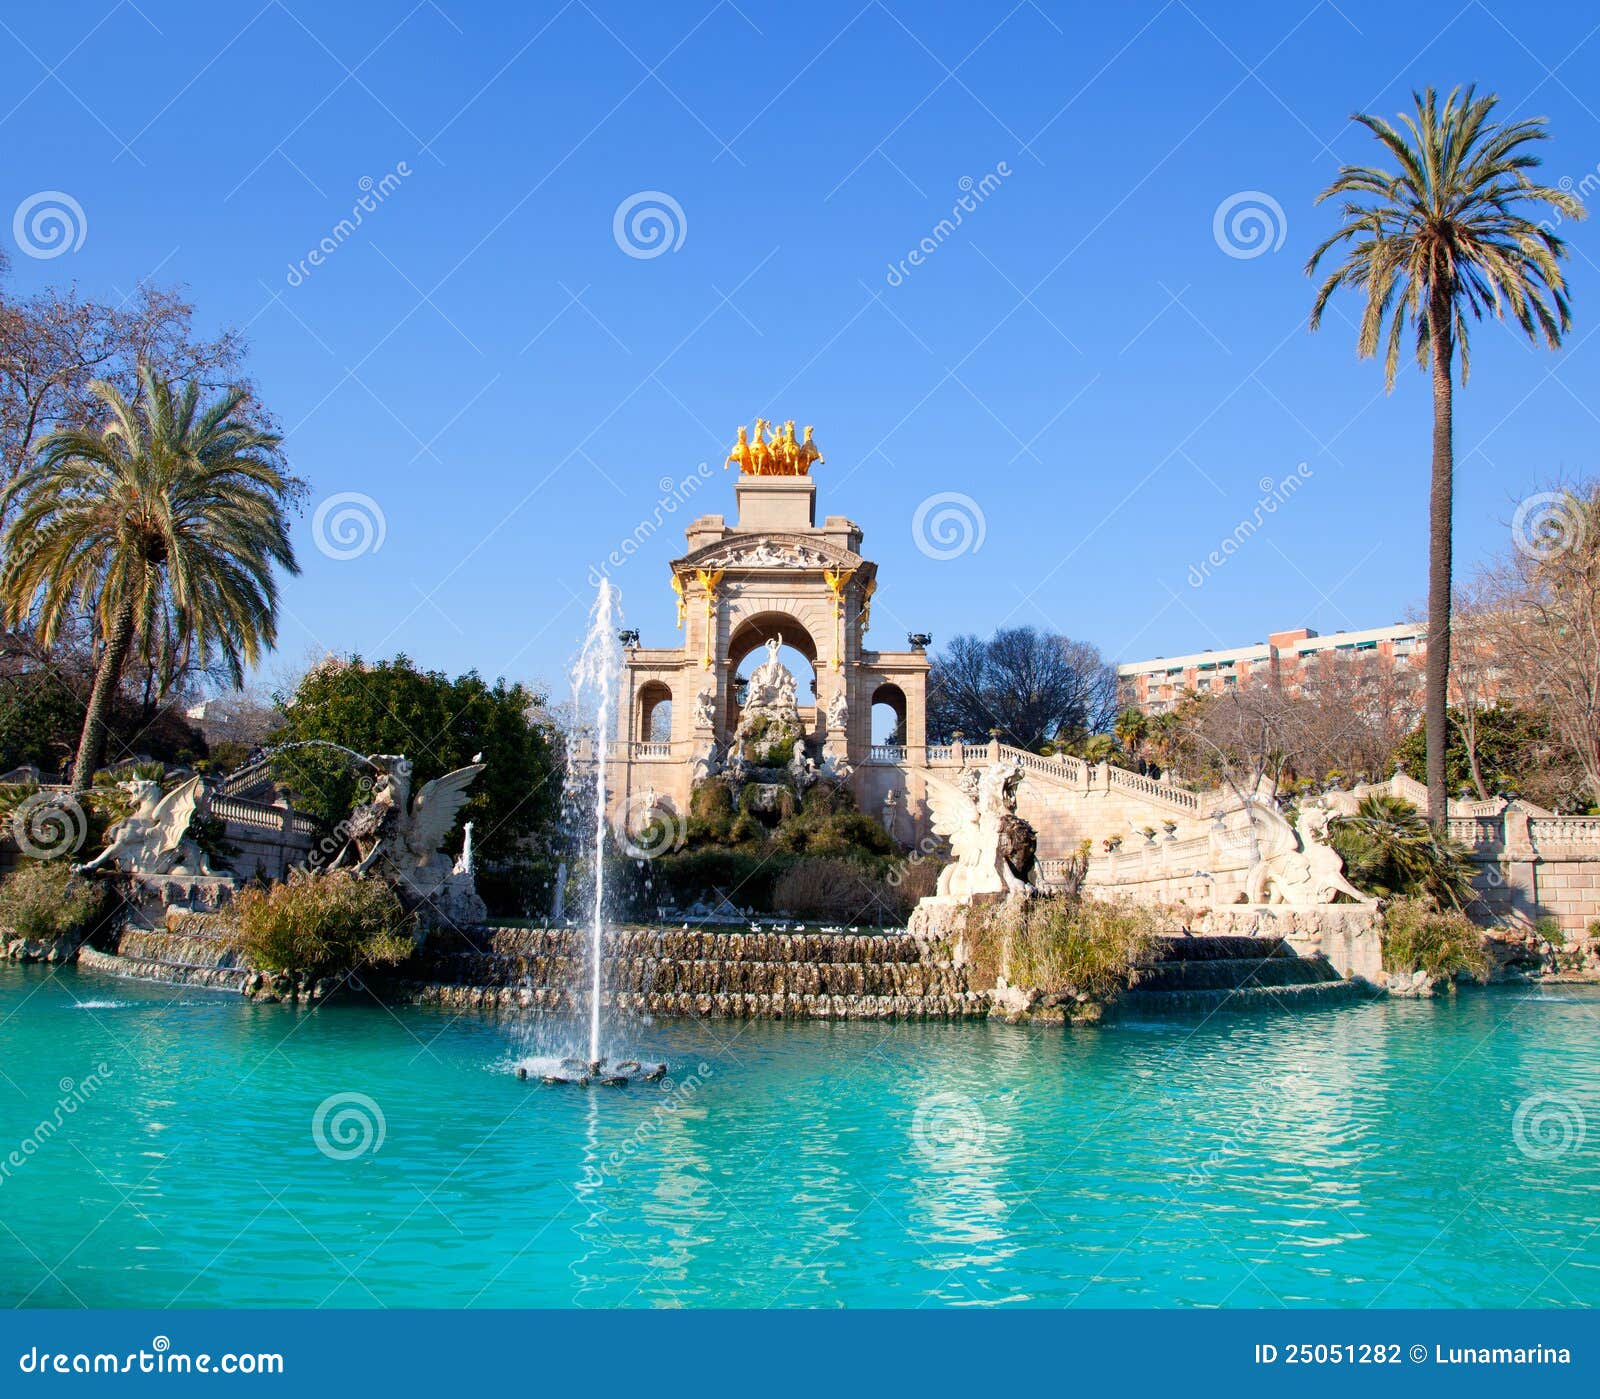 barcelona ciudadela park lake fountain